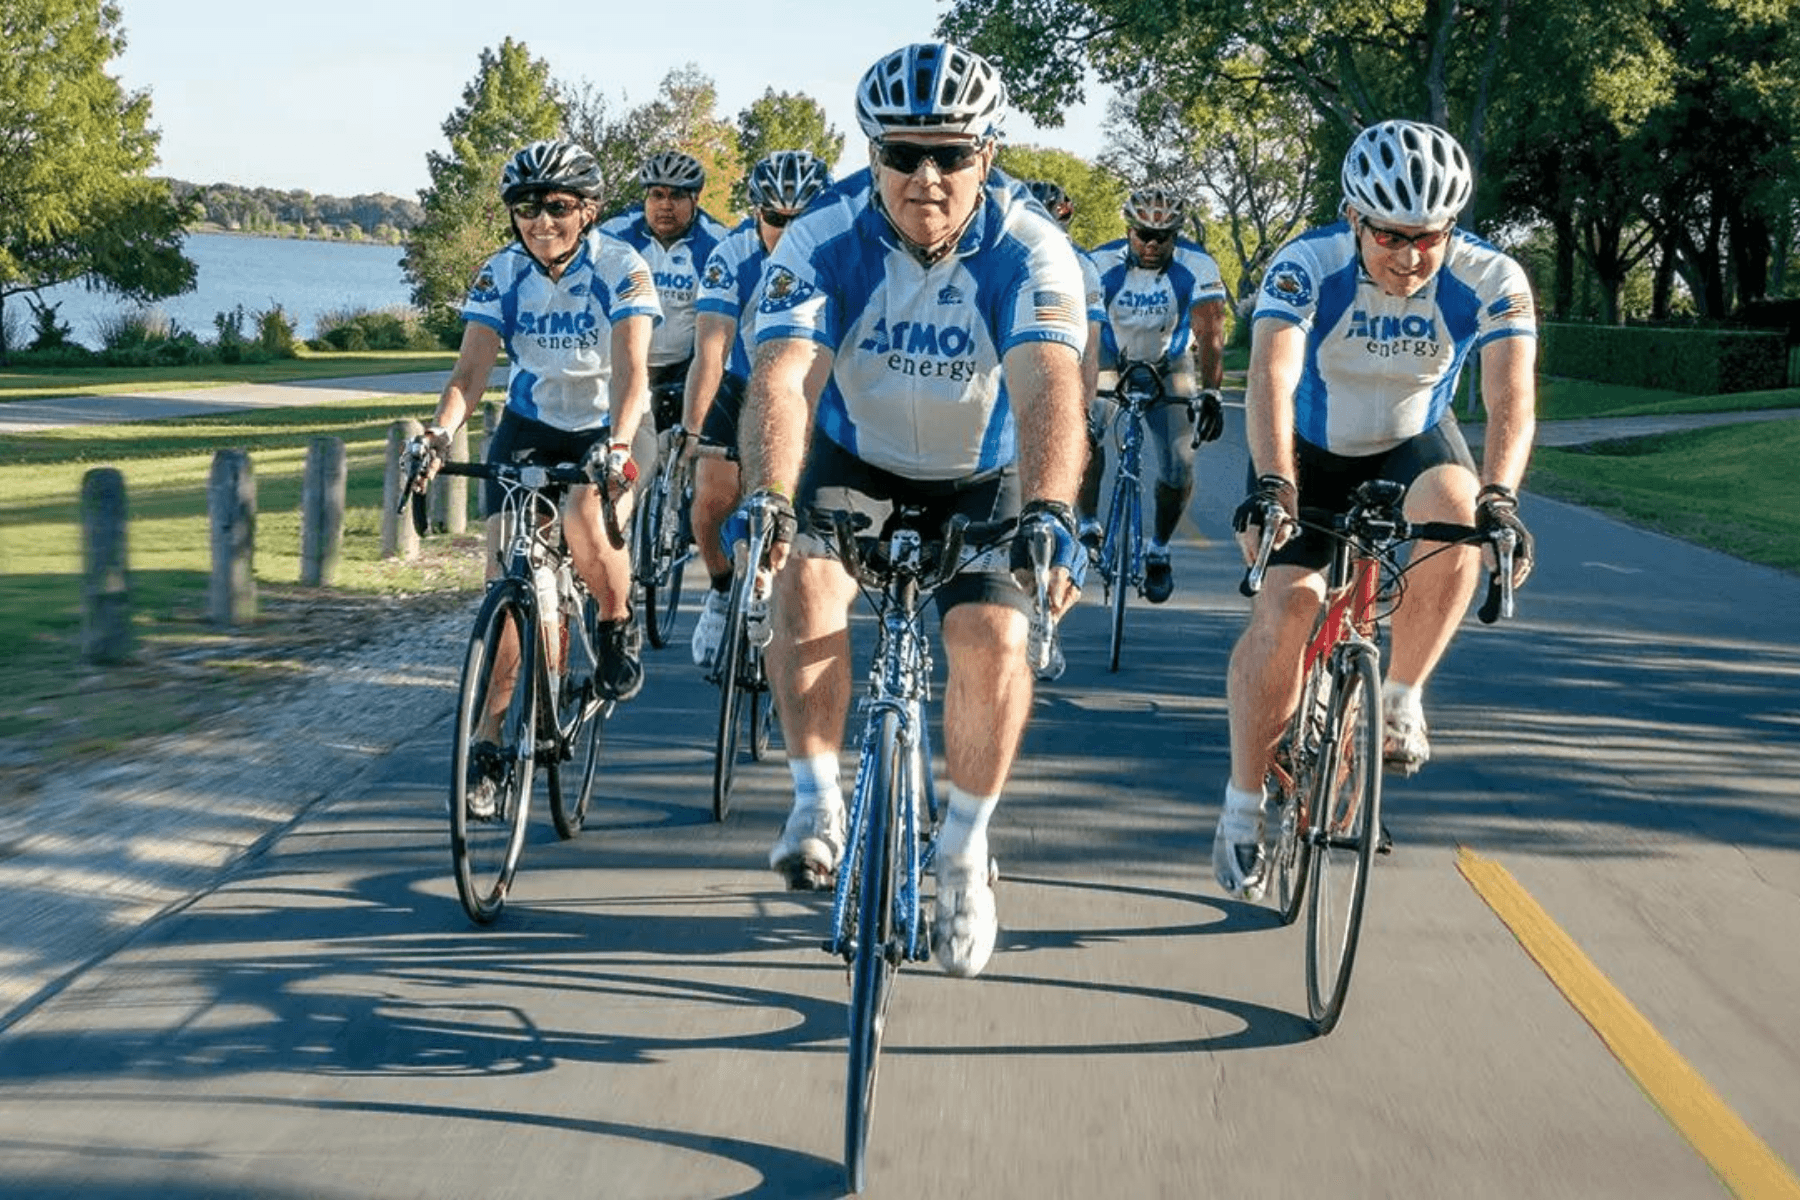 Atmos Energy bike team